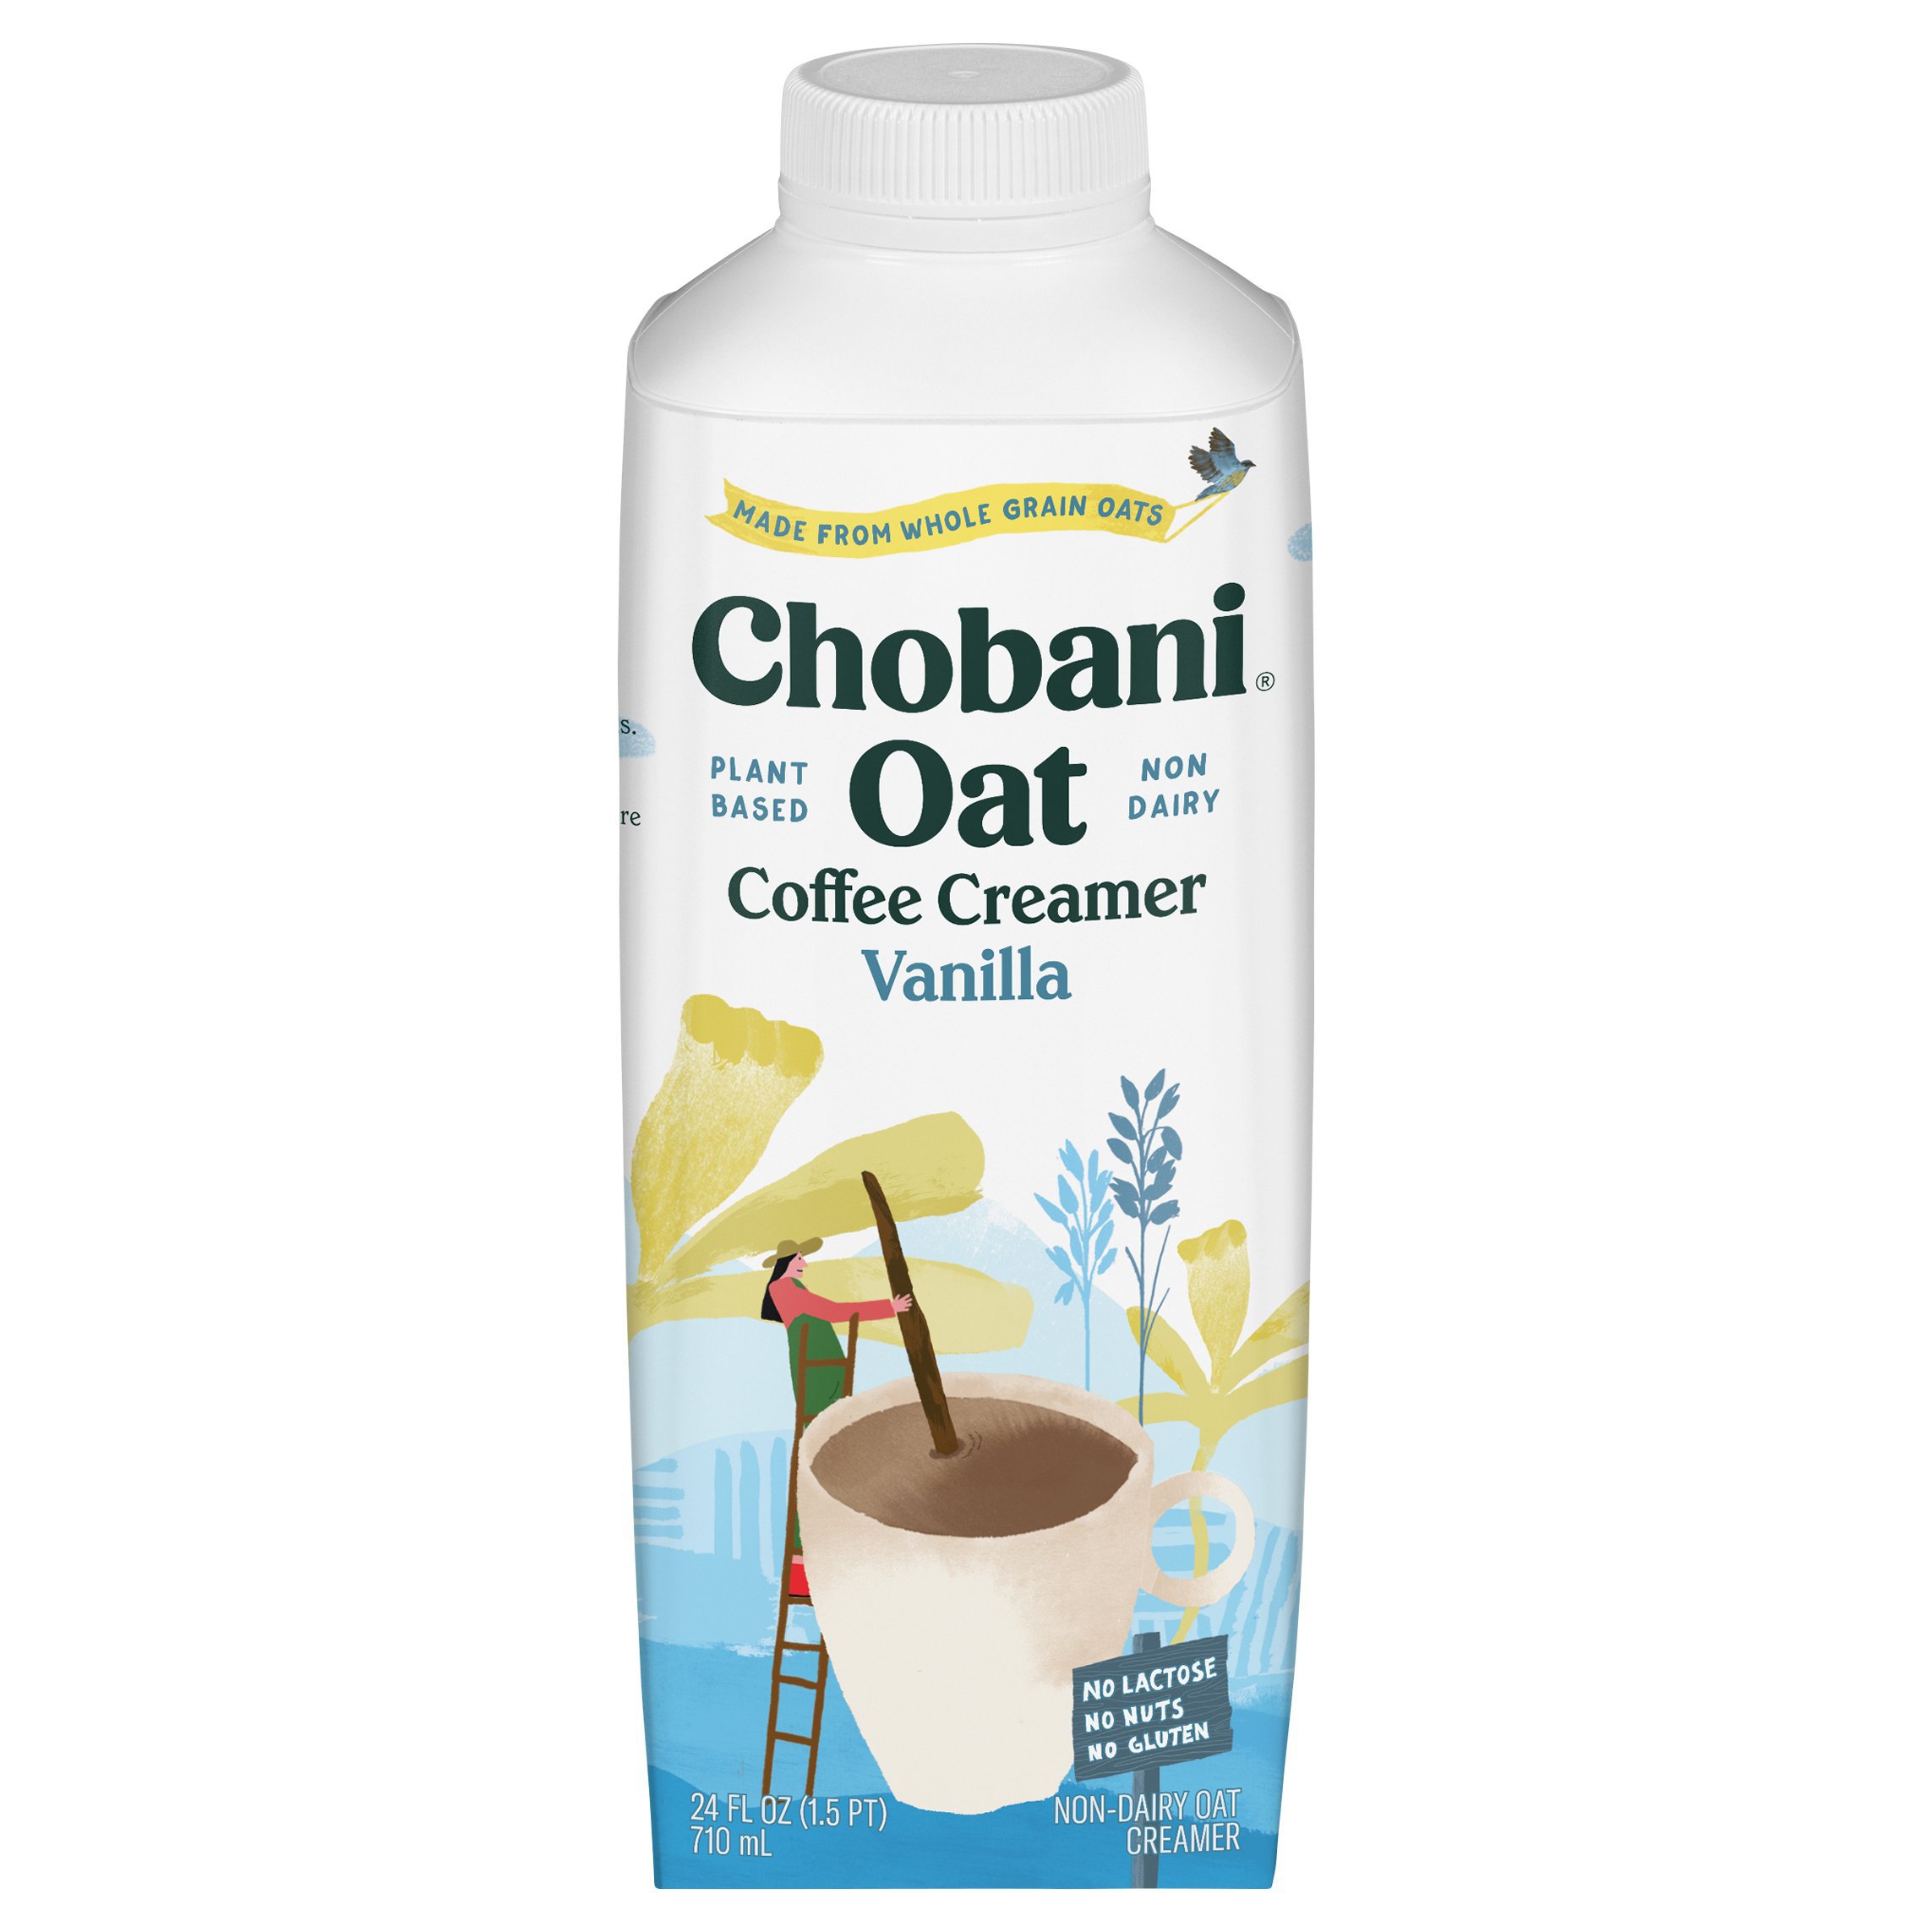 Chobani Oat Plant Based Vanilla Coffee Creamer Shop Coffee Creamer At